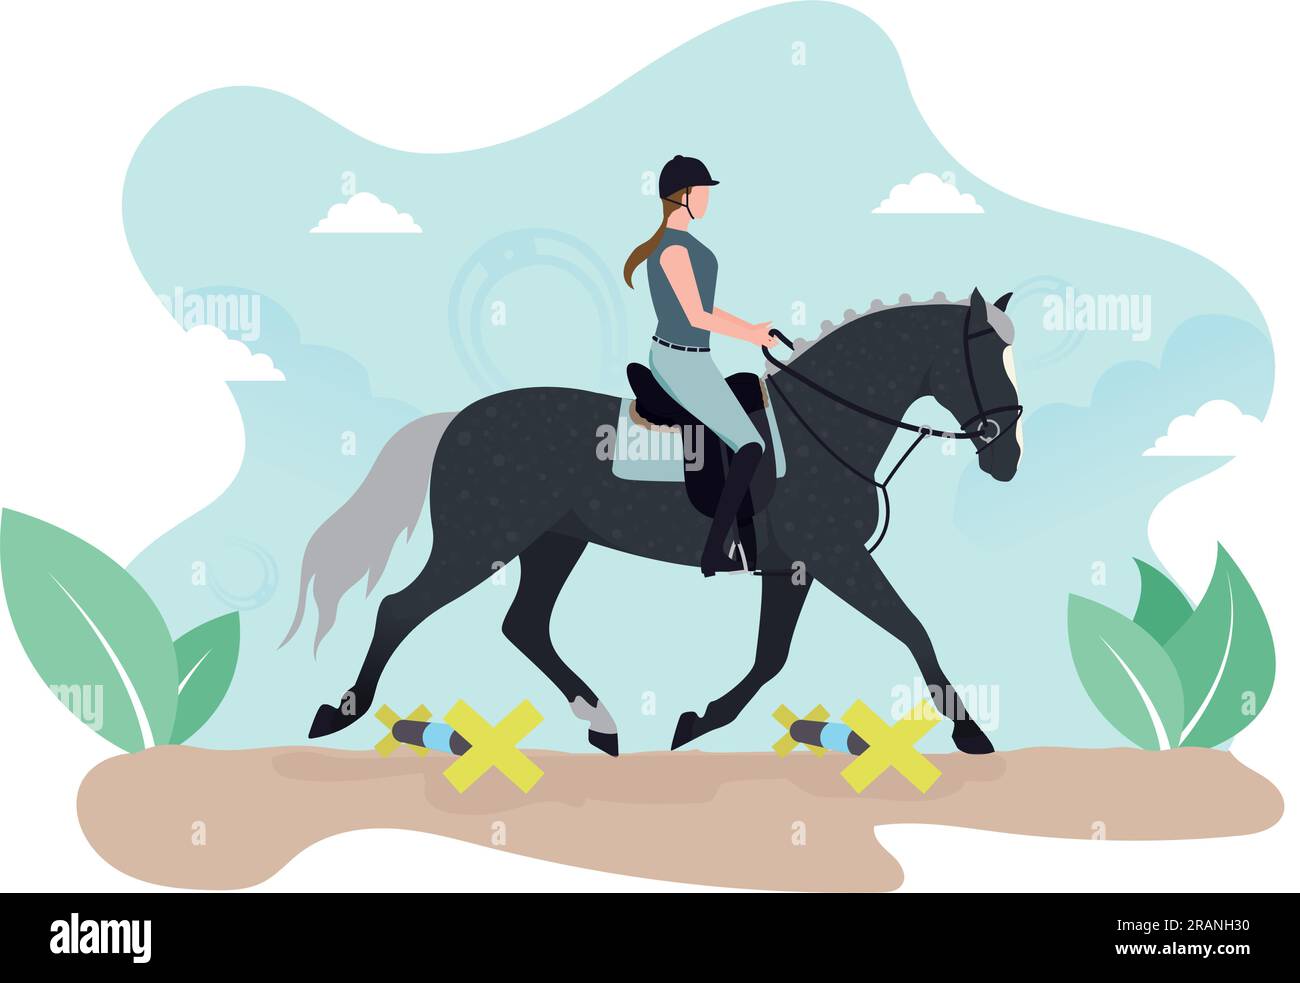 Lynx on the keys. Horse work on cavaletti and keys. Woman on a horse. Horse Rider. Stock Vector